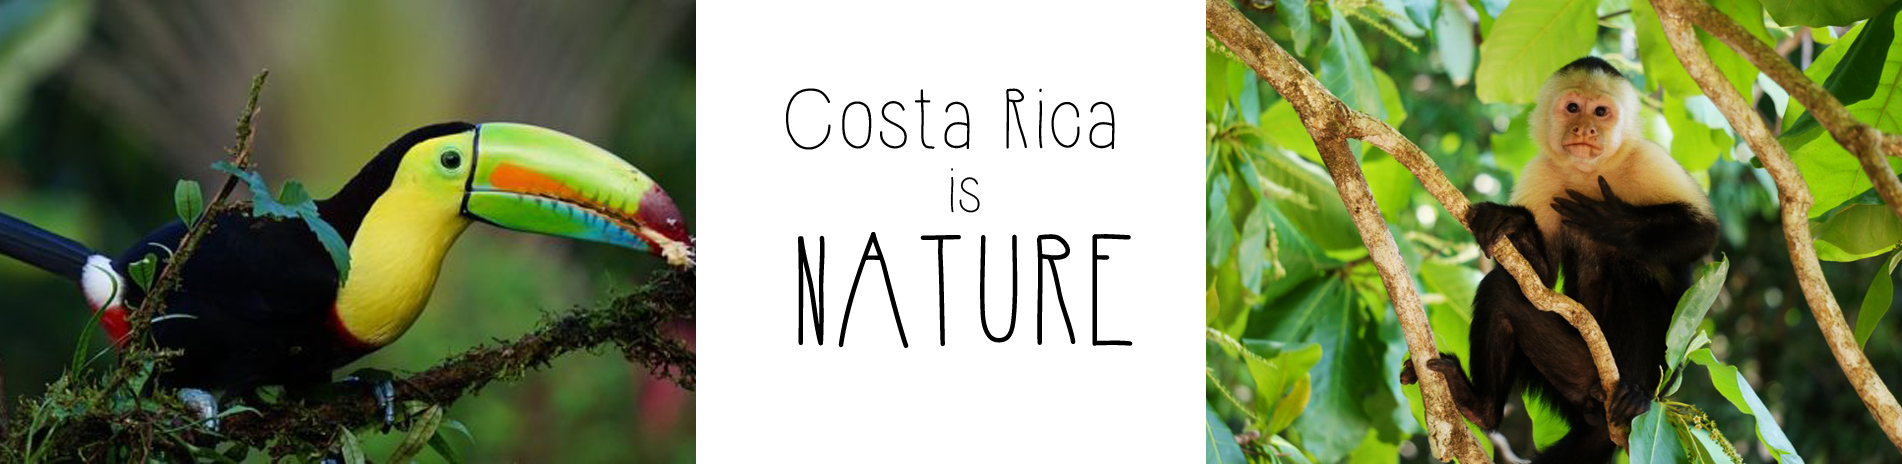 Costa Rica Nature 2